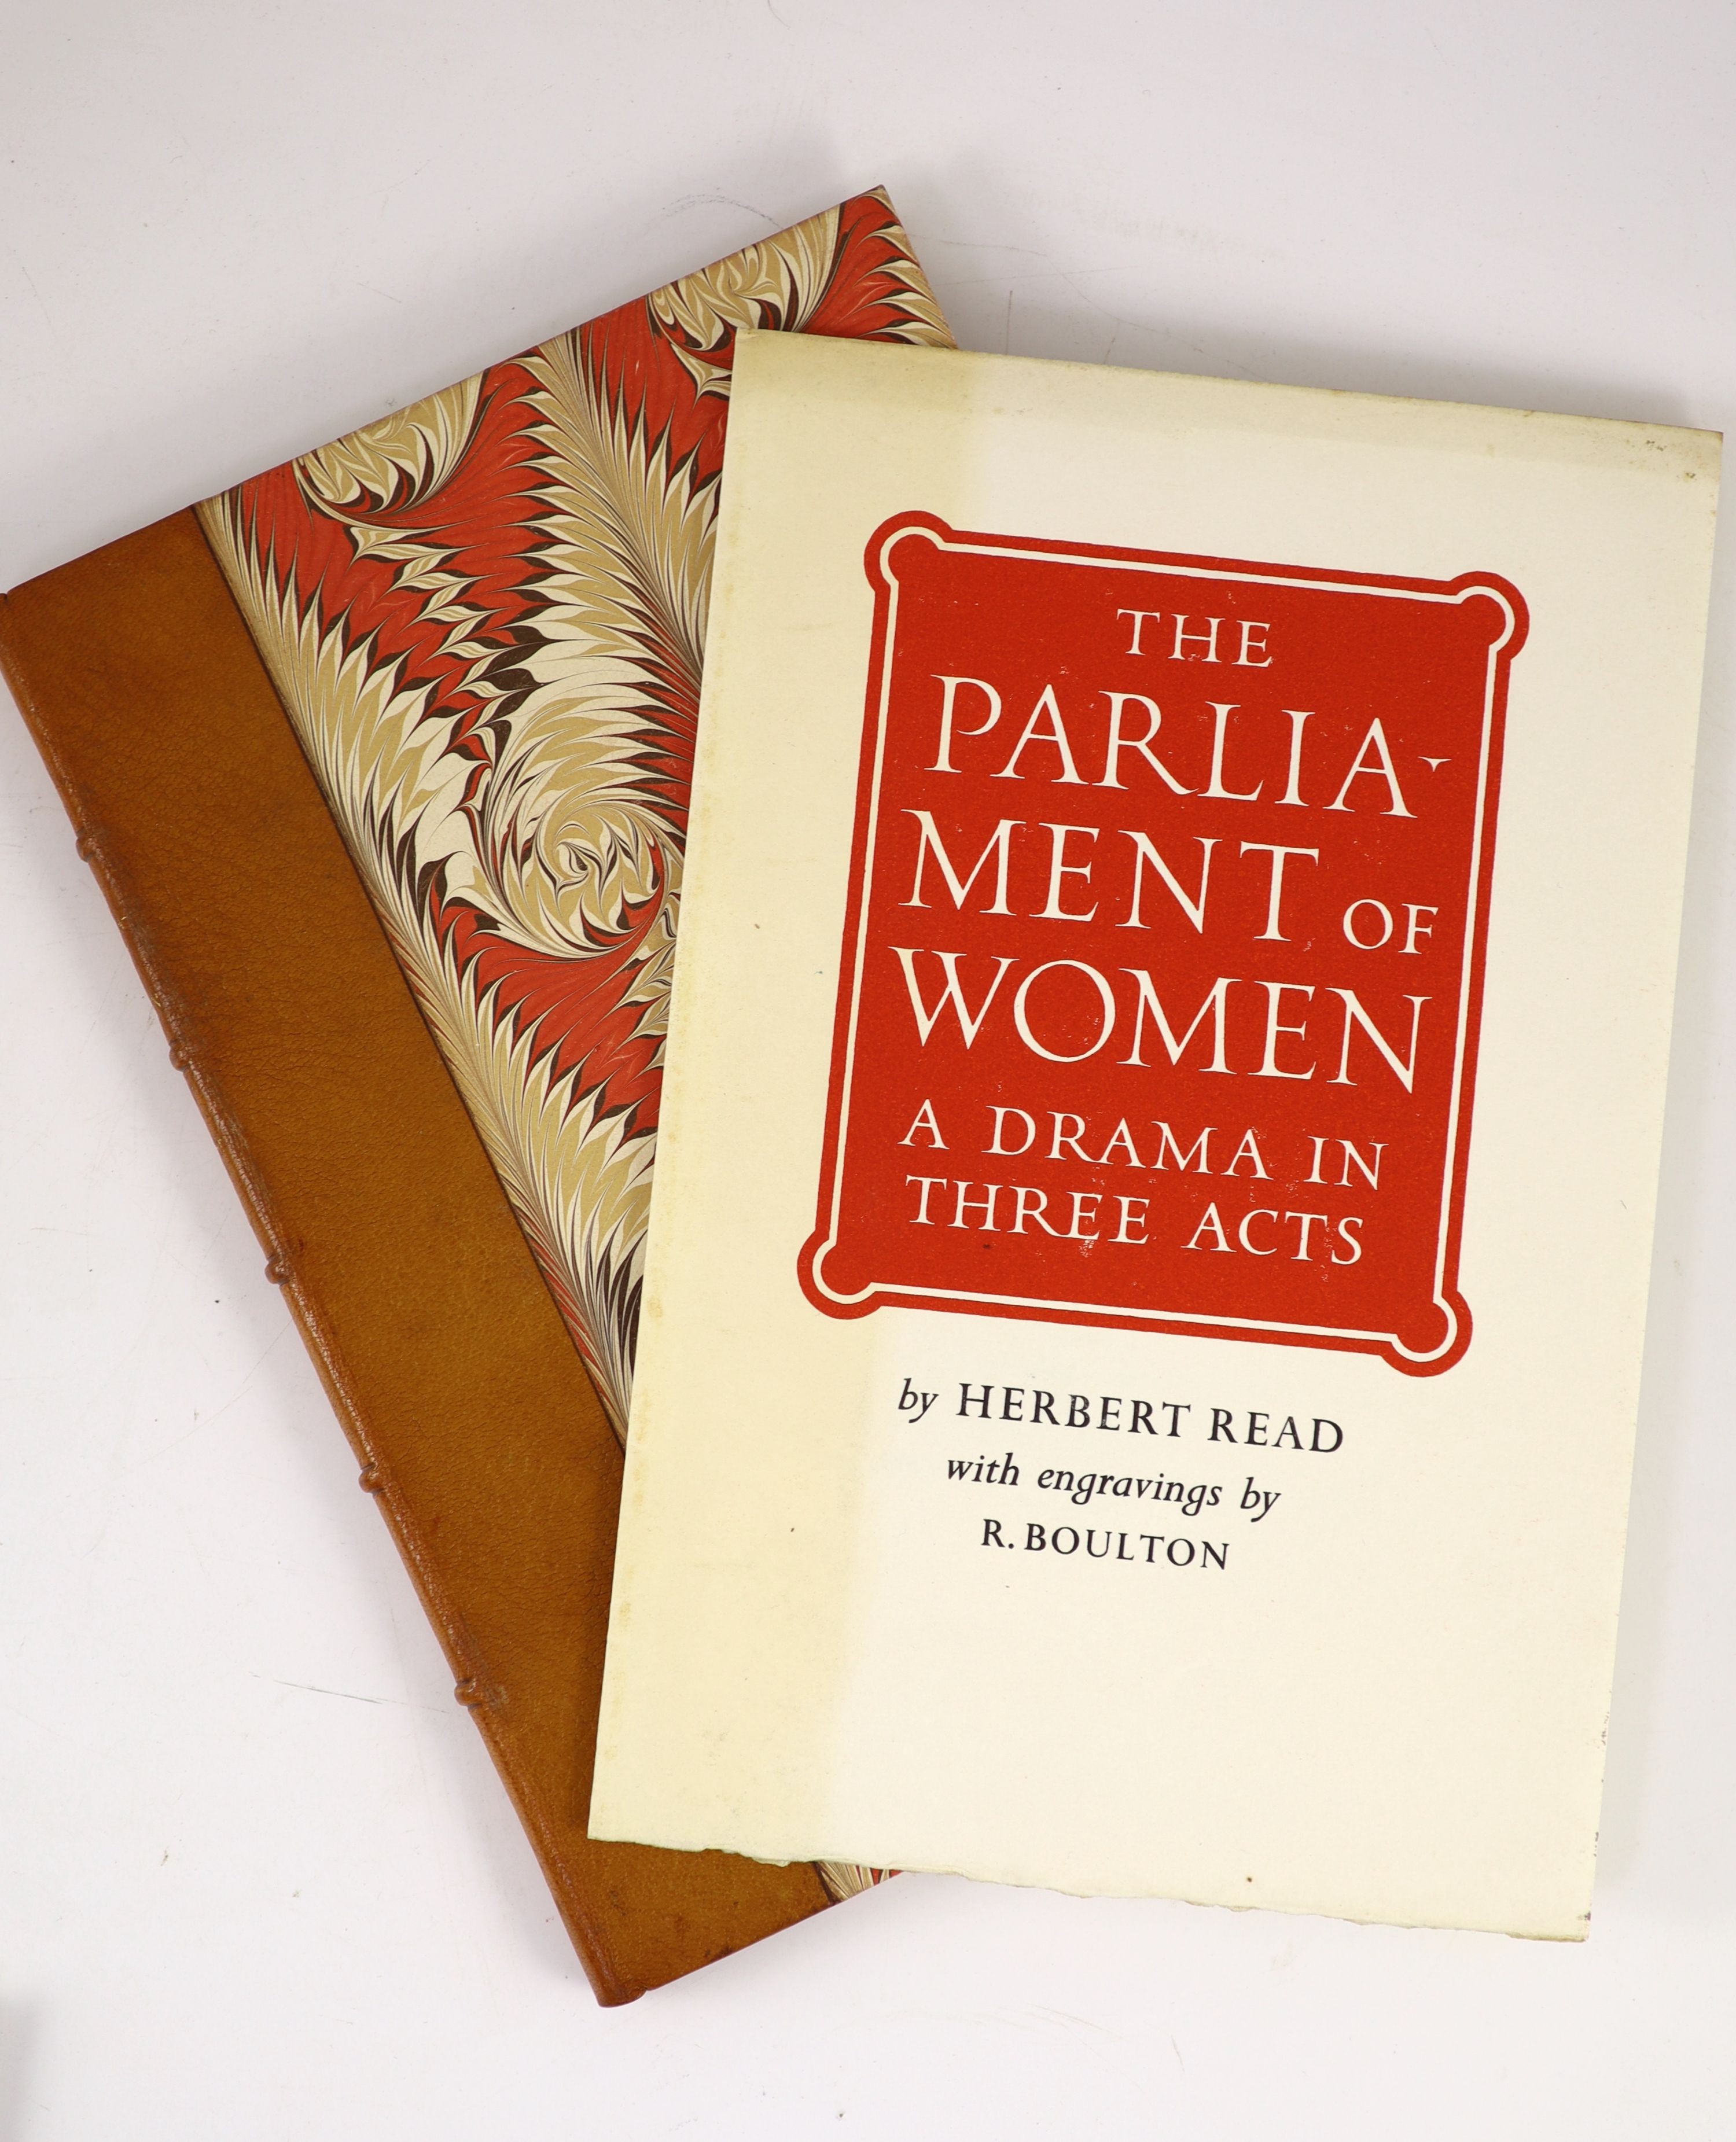 Read, Herbert - The Parliament of Women, one of 100, illustrated by Reg Boulton, folio, half morocco, Vine Press, London, 1960